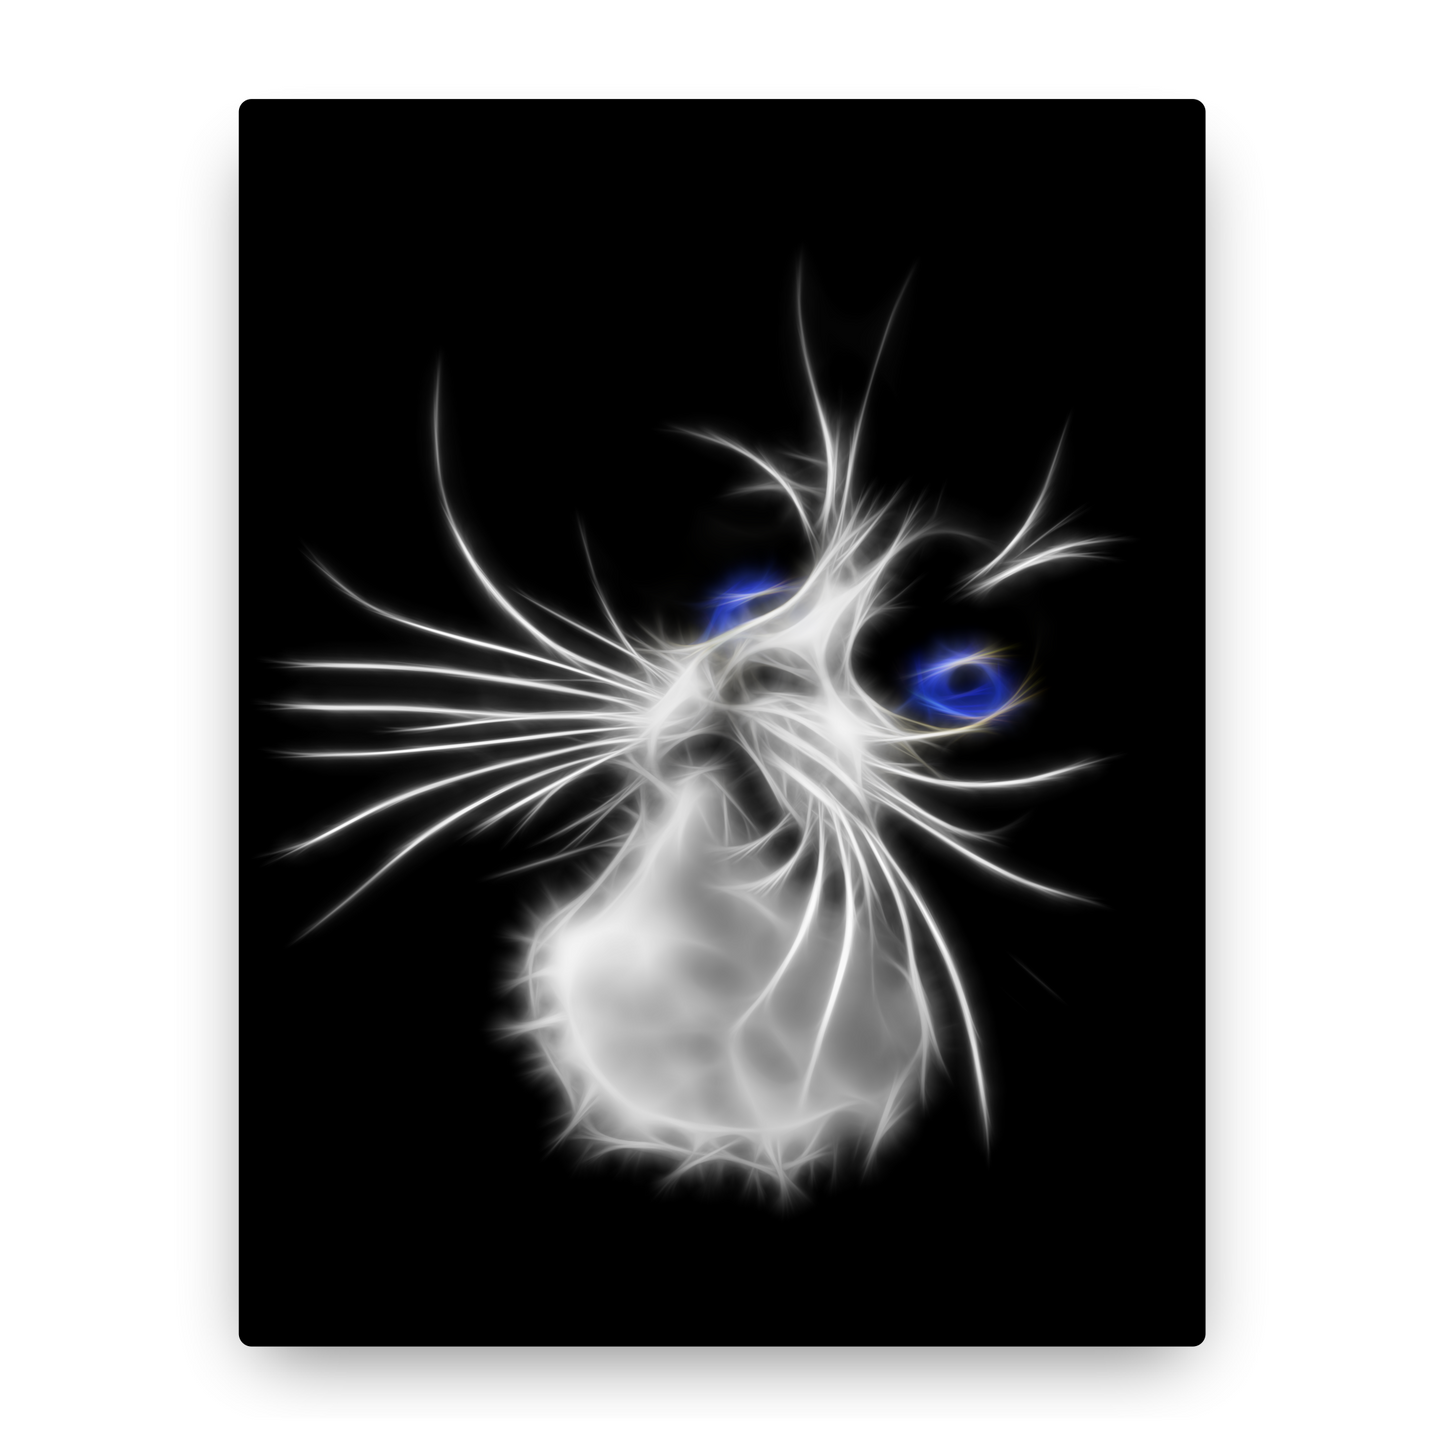 Blue Eye Tuxedo Cat Aluminium Metal Wall Plaque